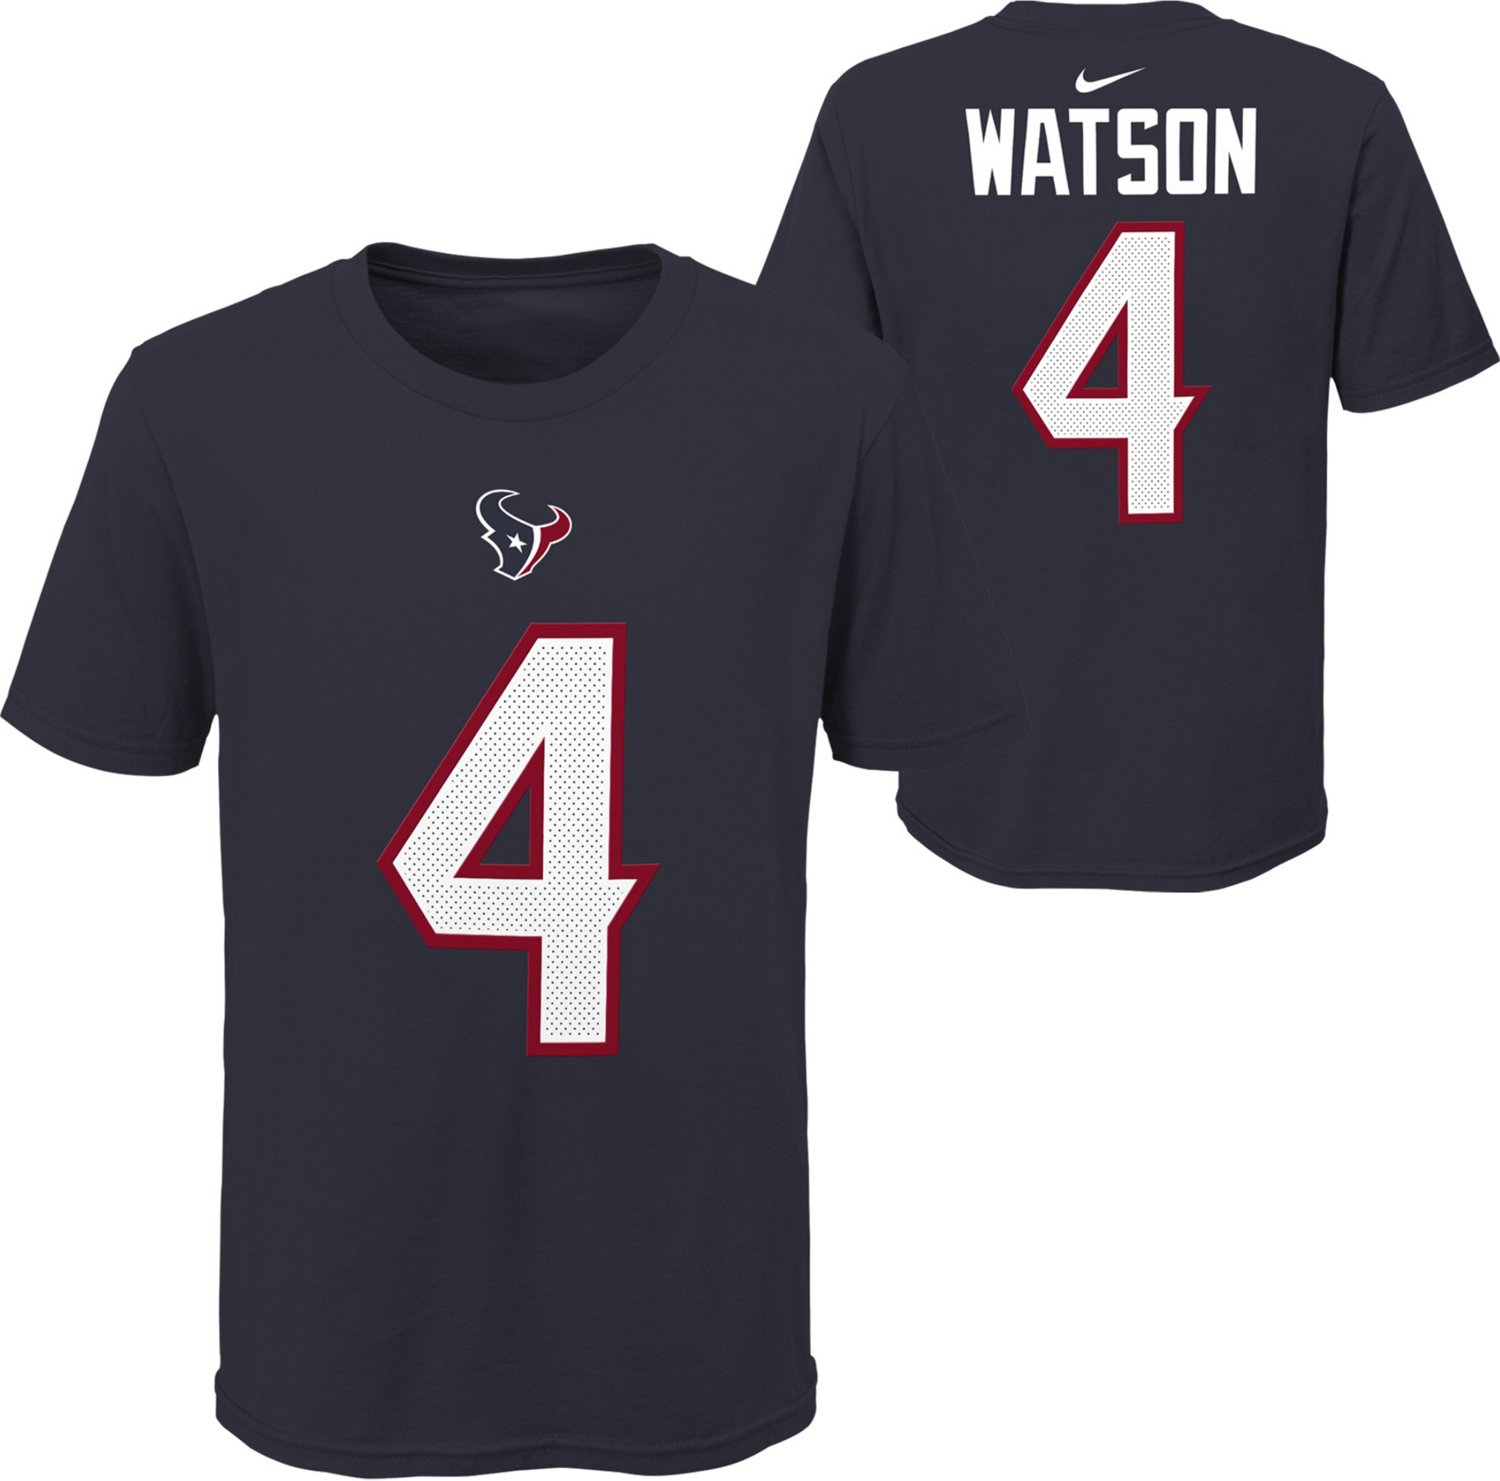 Nike Boys' Houston Texans Deshaun Watson Graphic T-shirt